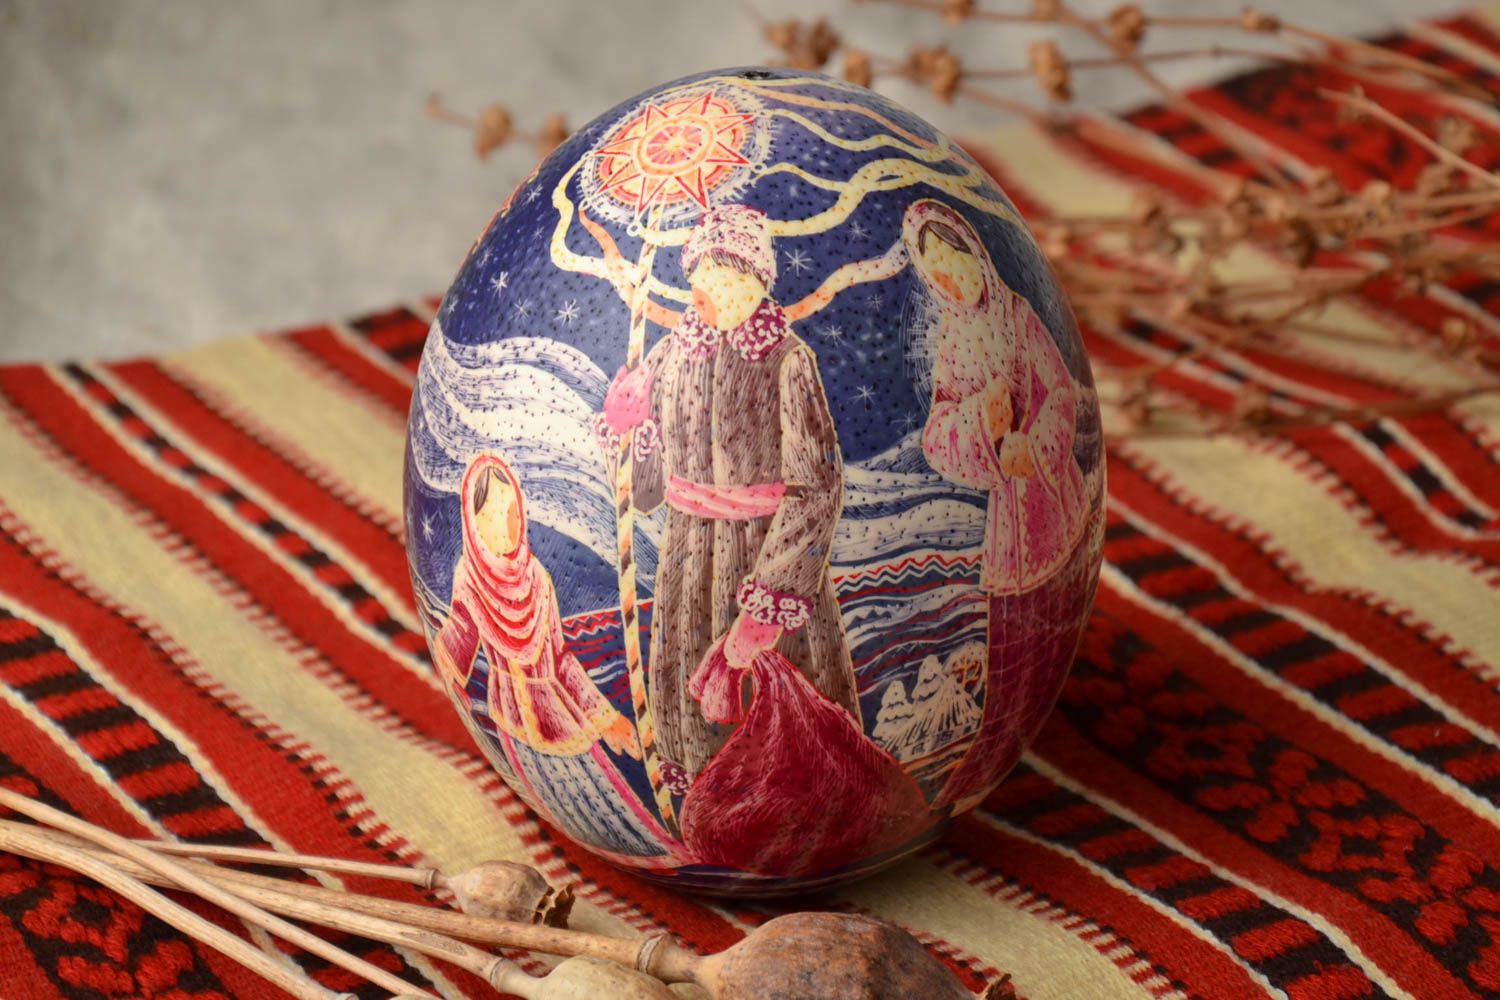 Декоративное яйцо хэнд мейд с этническим рисунком  фото 1